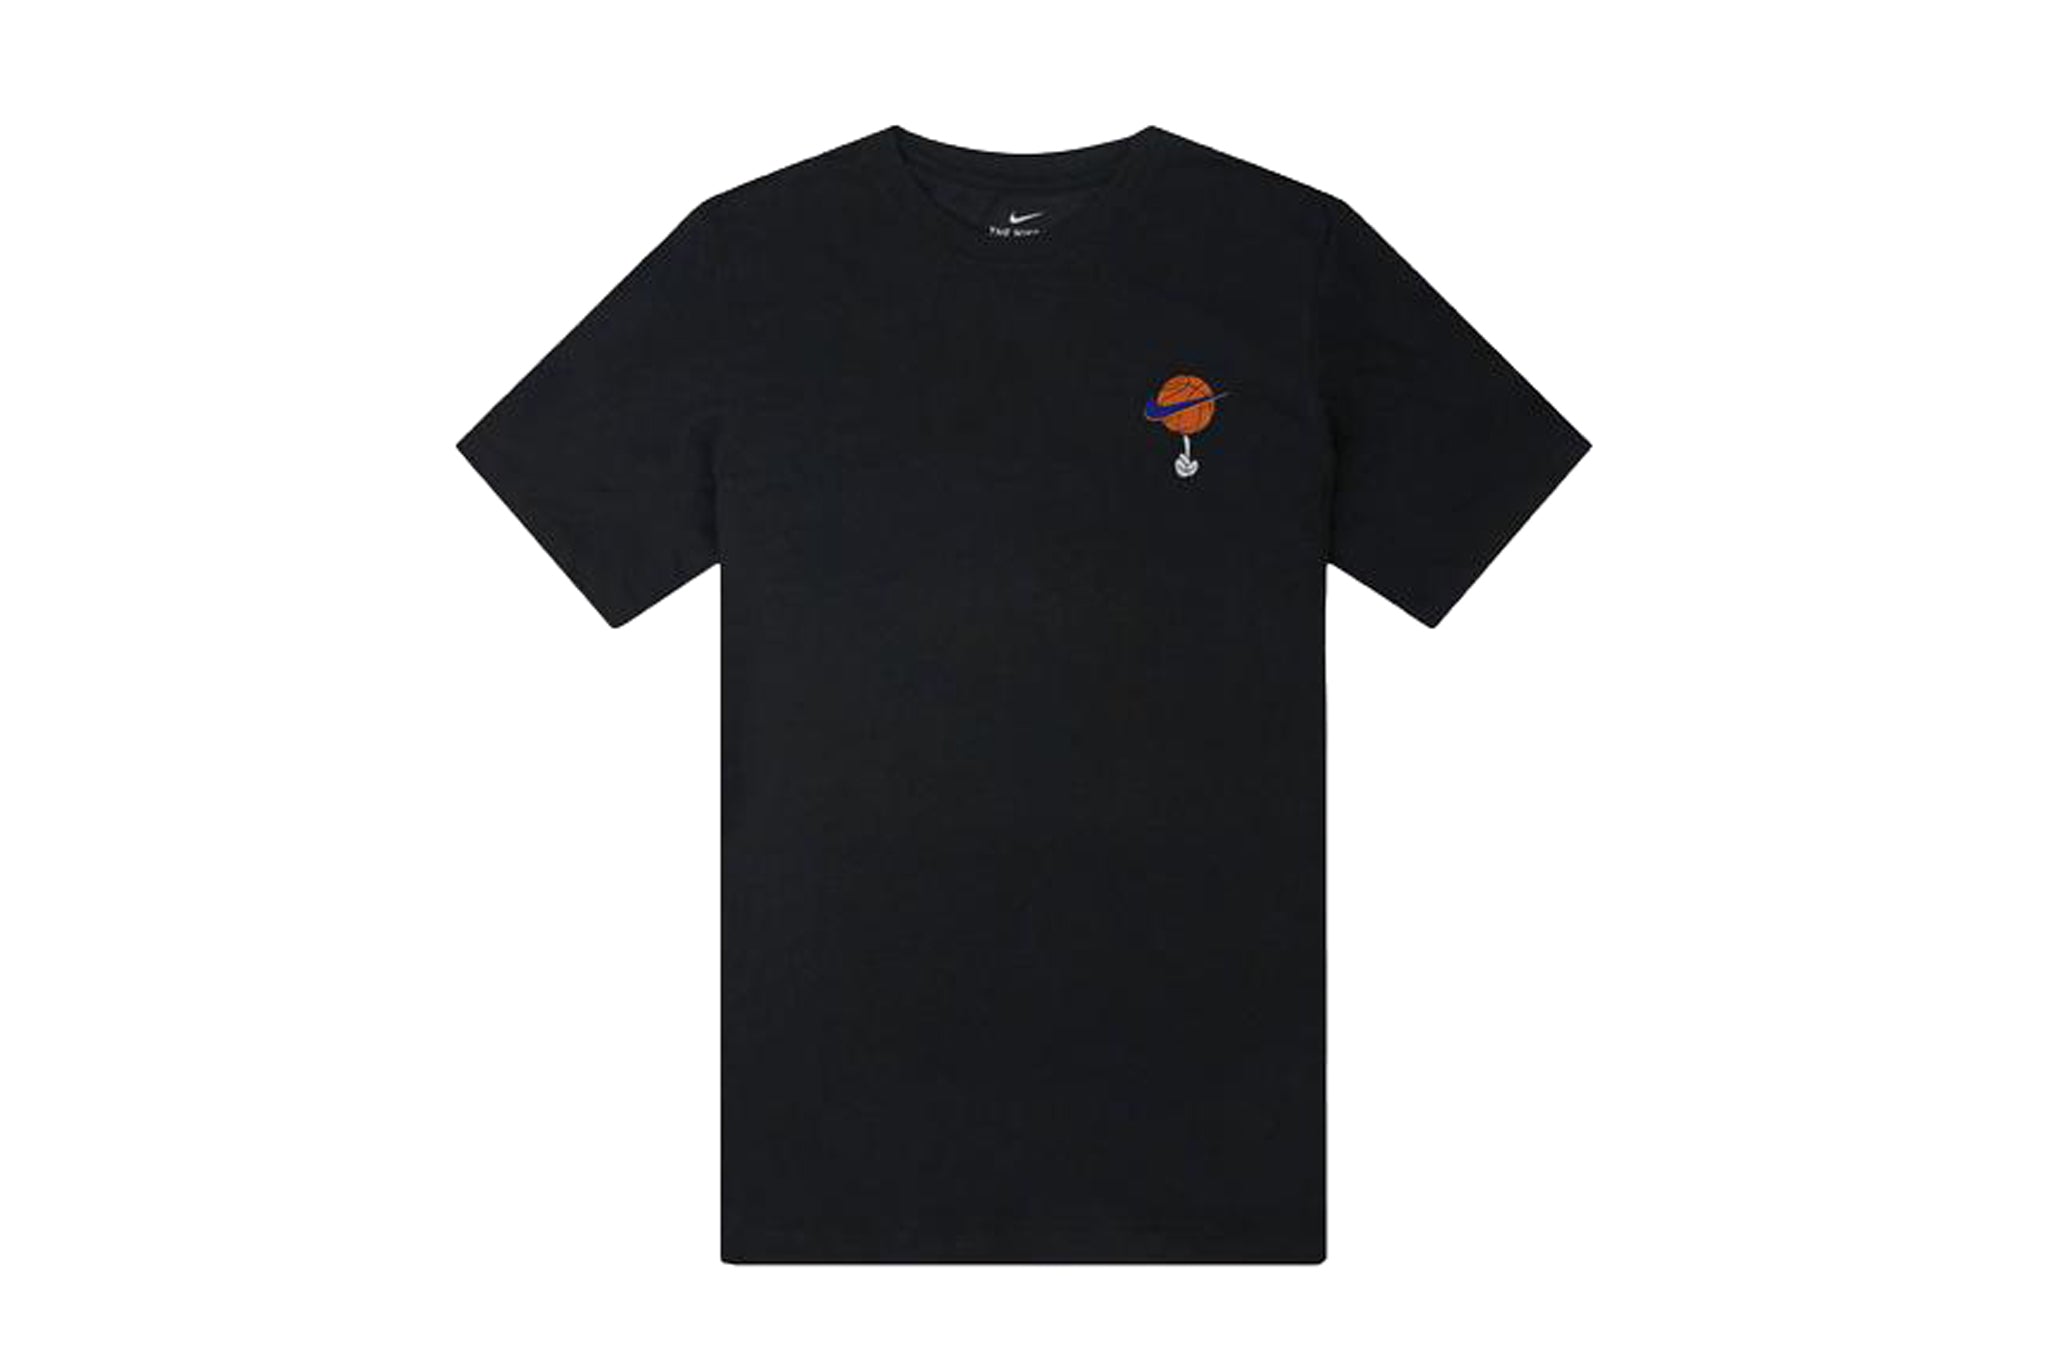 Nike x Space Jam 2 T-Shirt